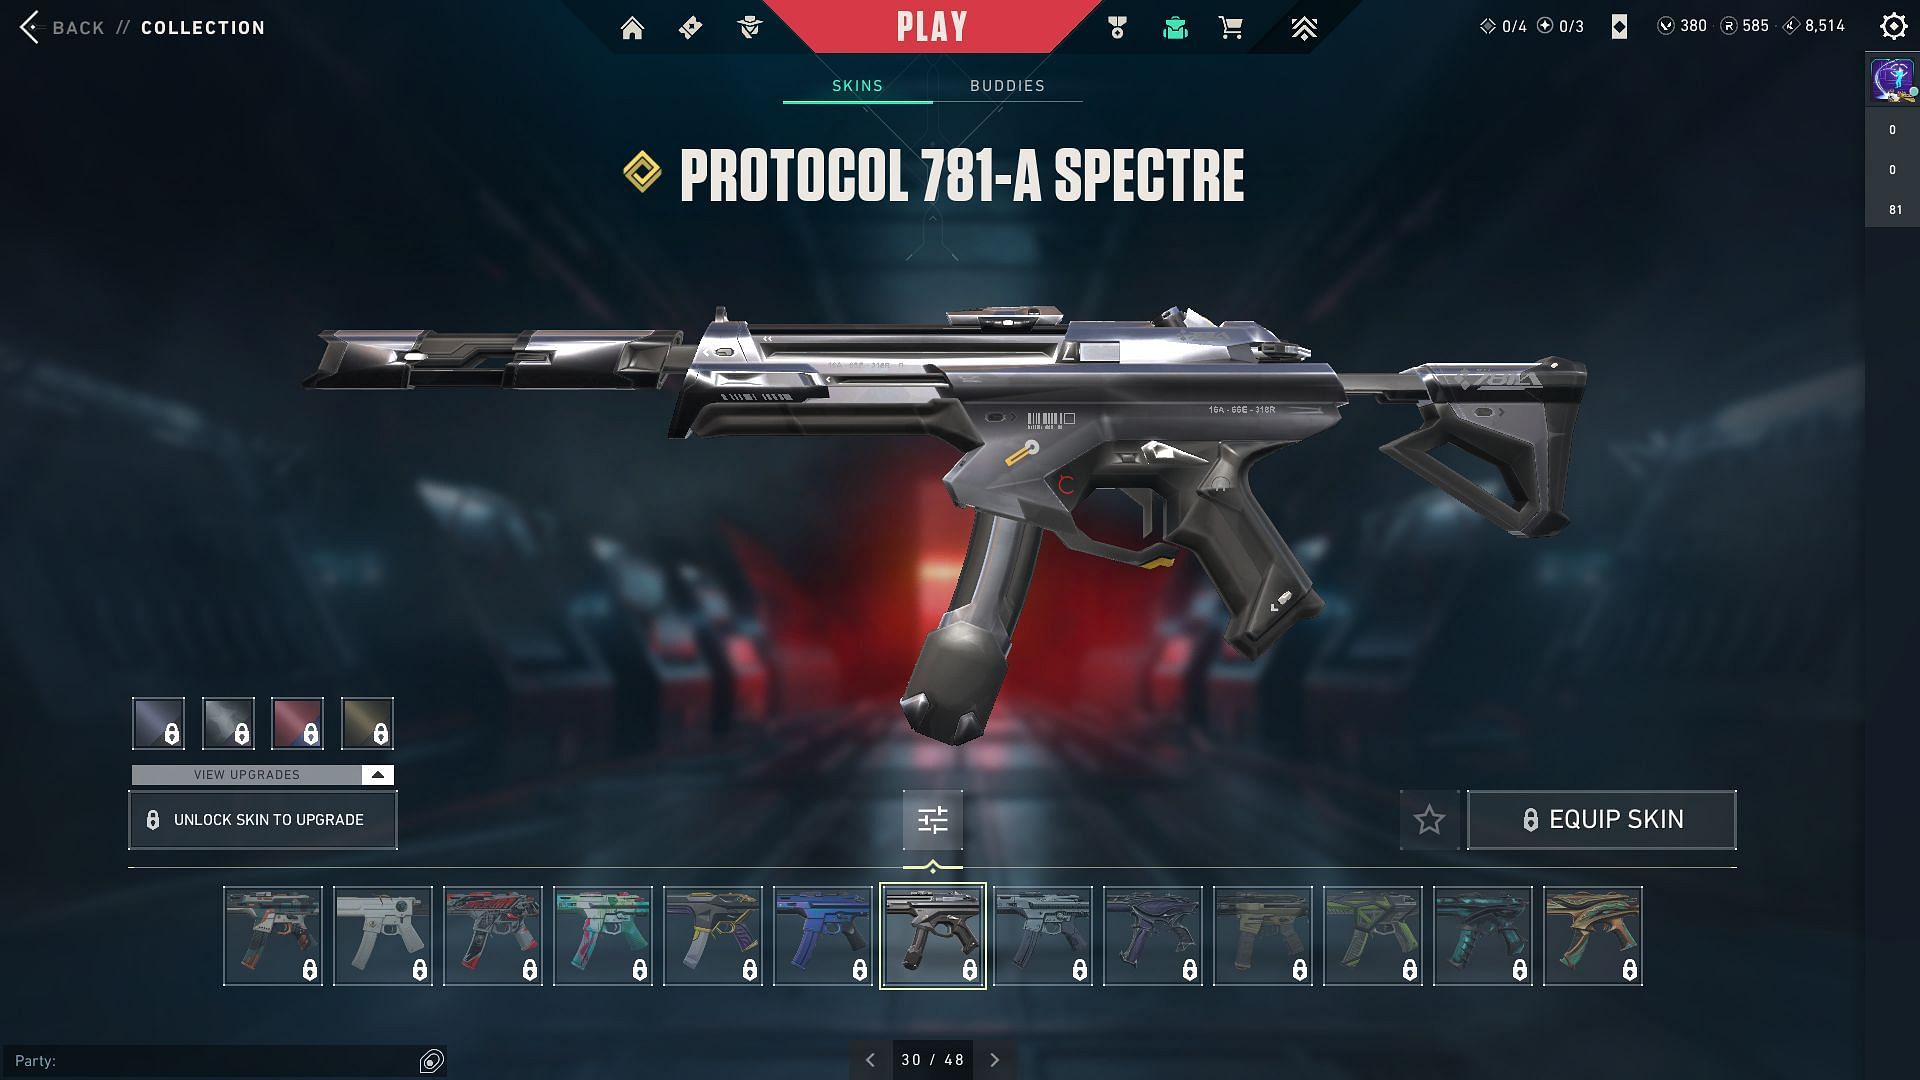 Protocol 781- A Spectre (Image via Riot Games)